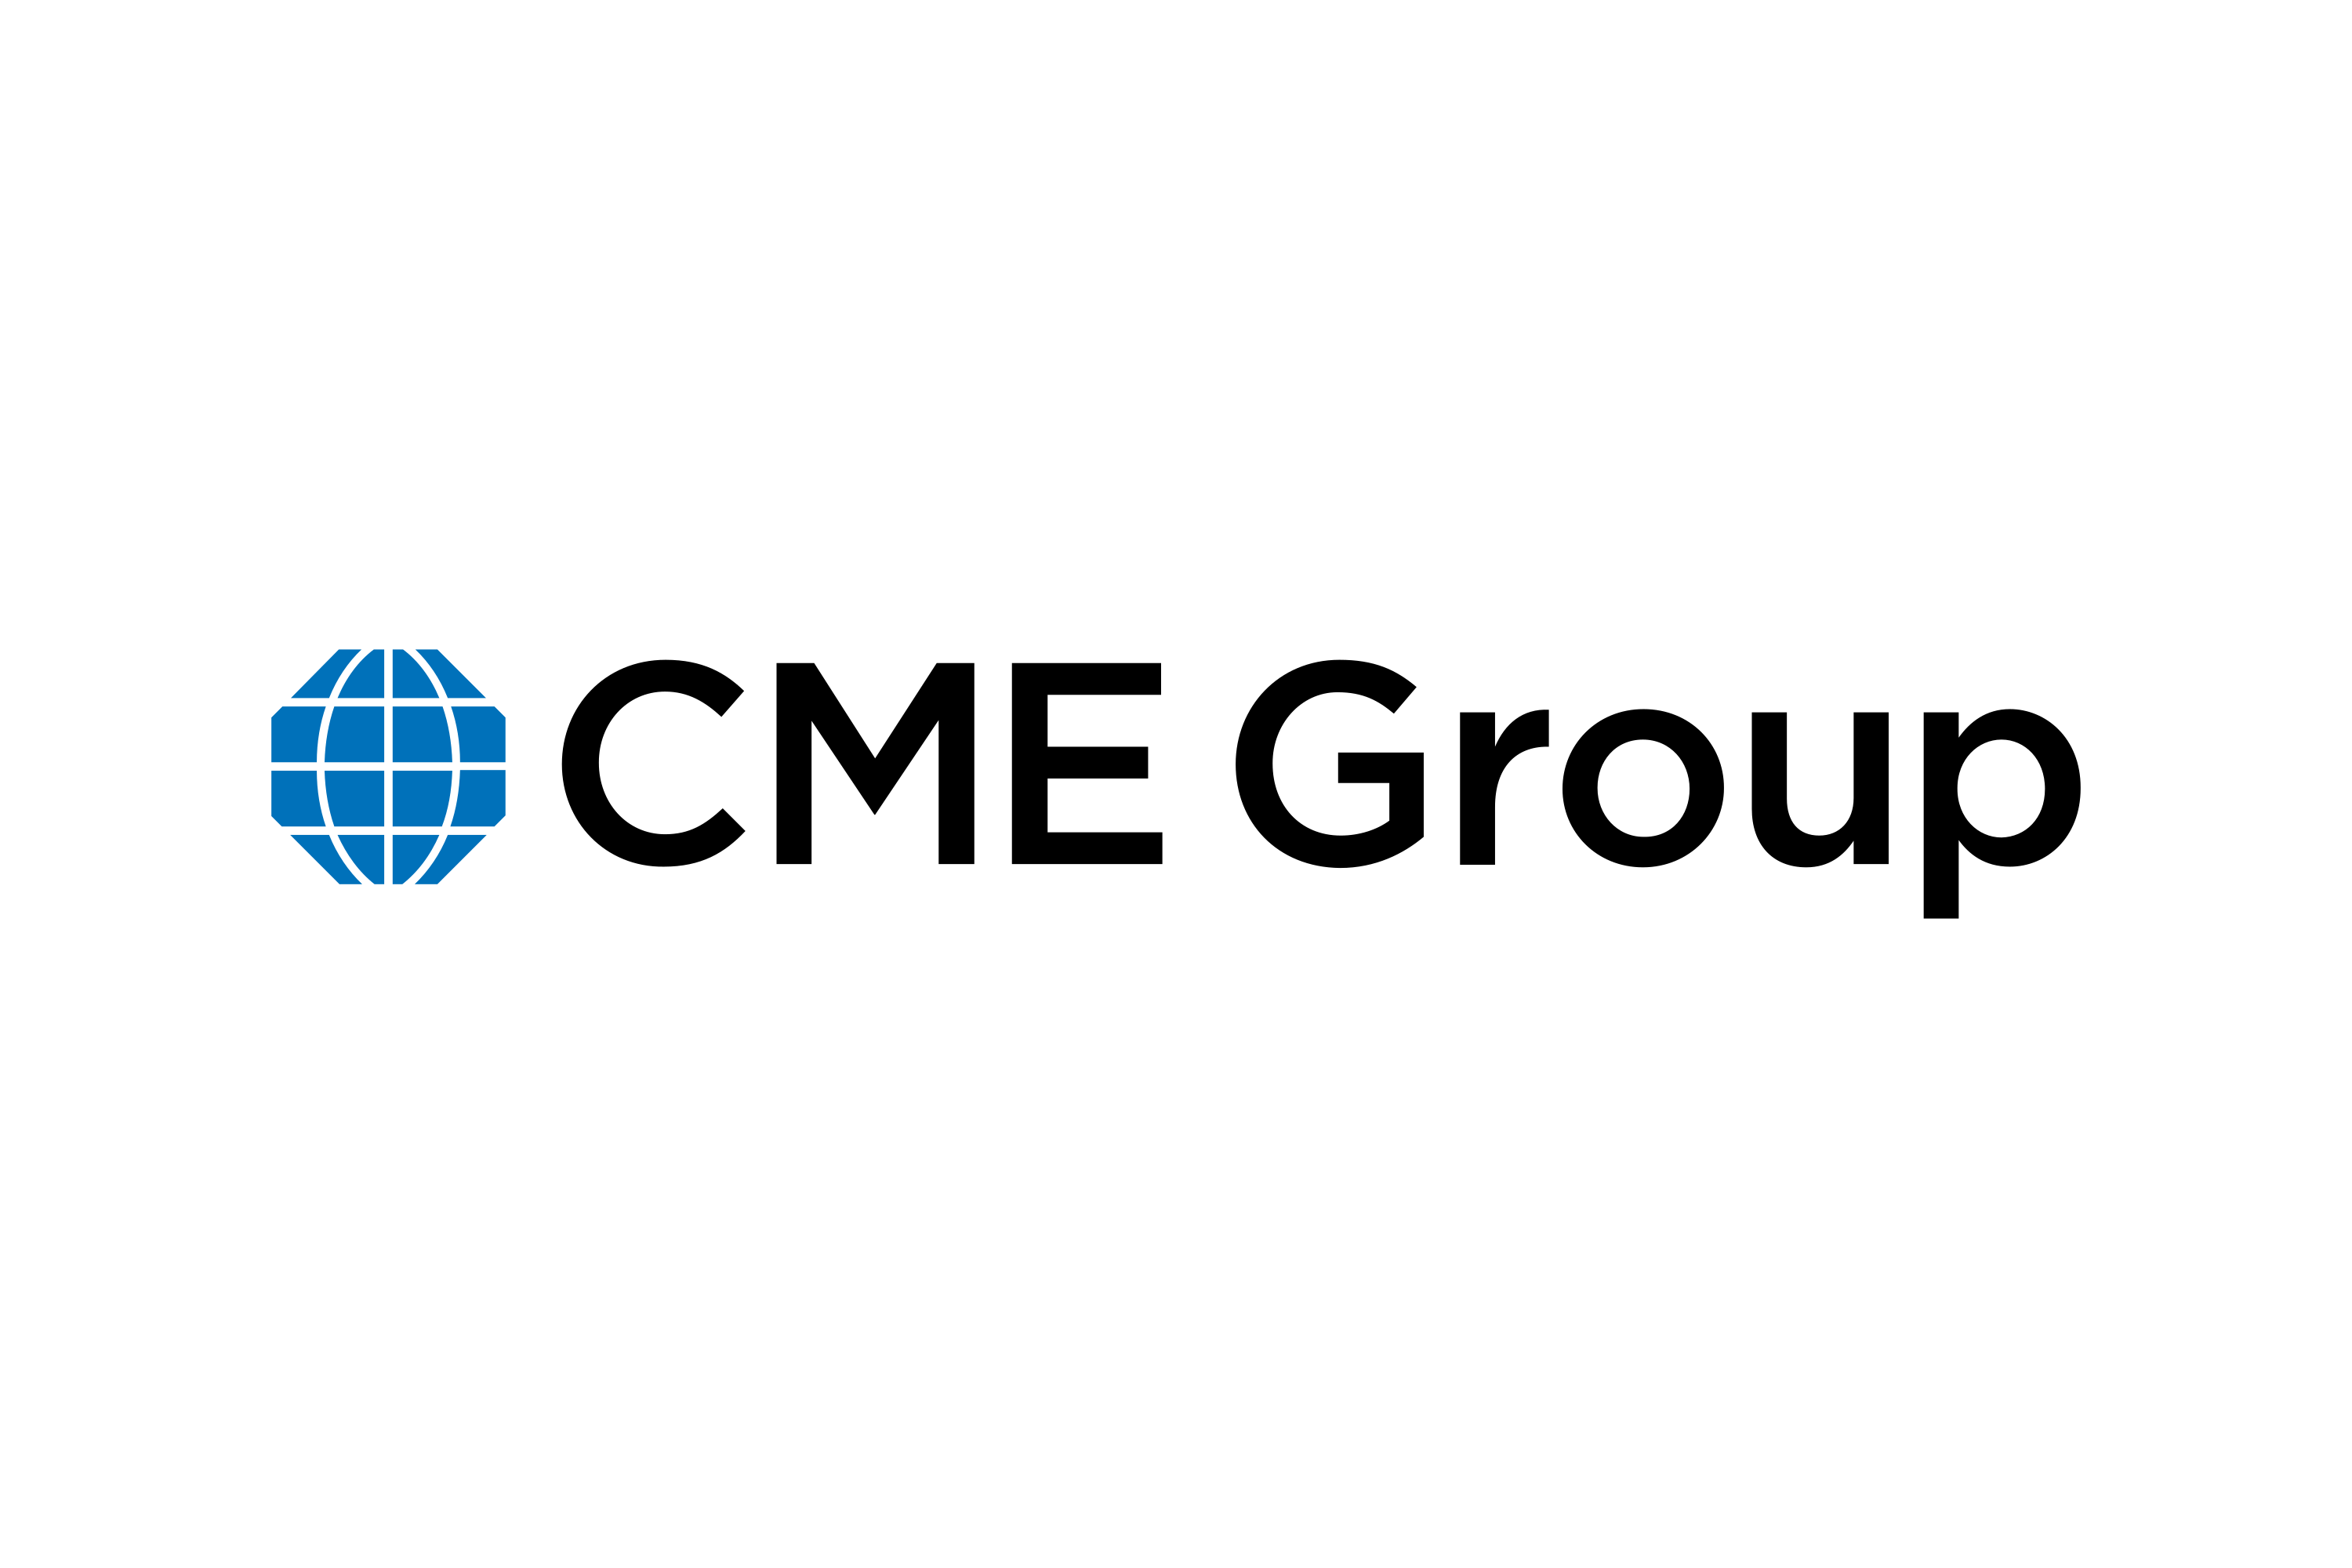 Download CME Group Logo in SVG Vector or PNG File Format - Logo.wine